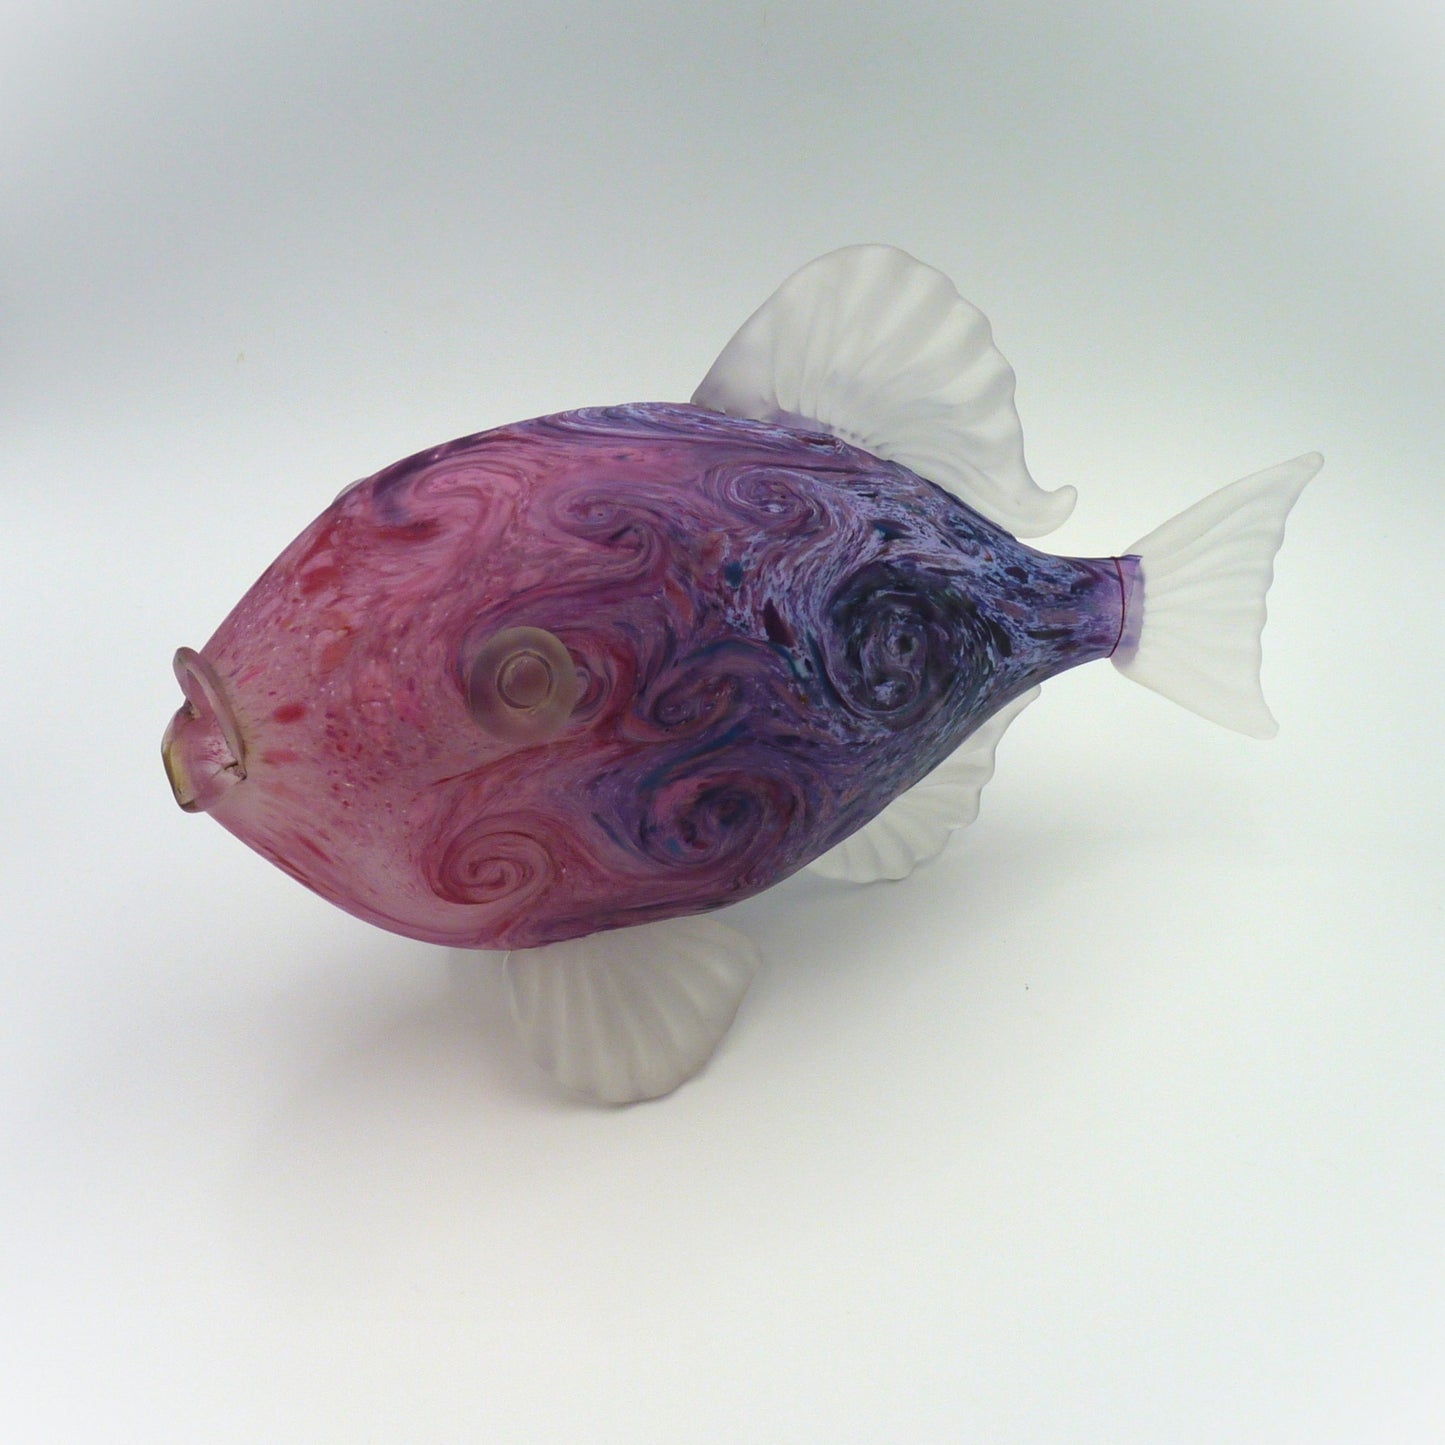 Violet Starry Fish